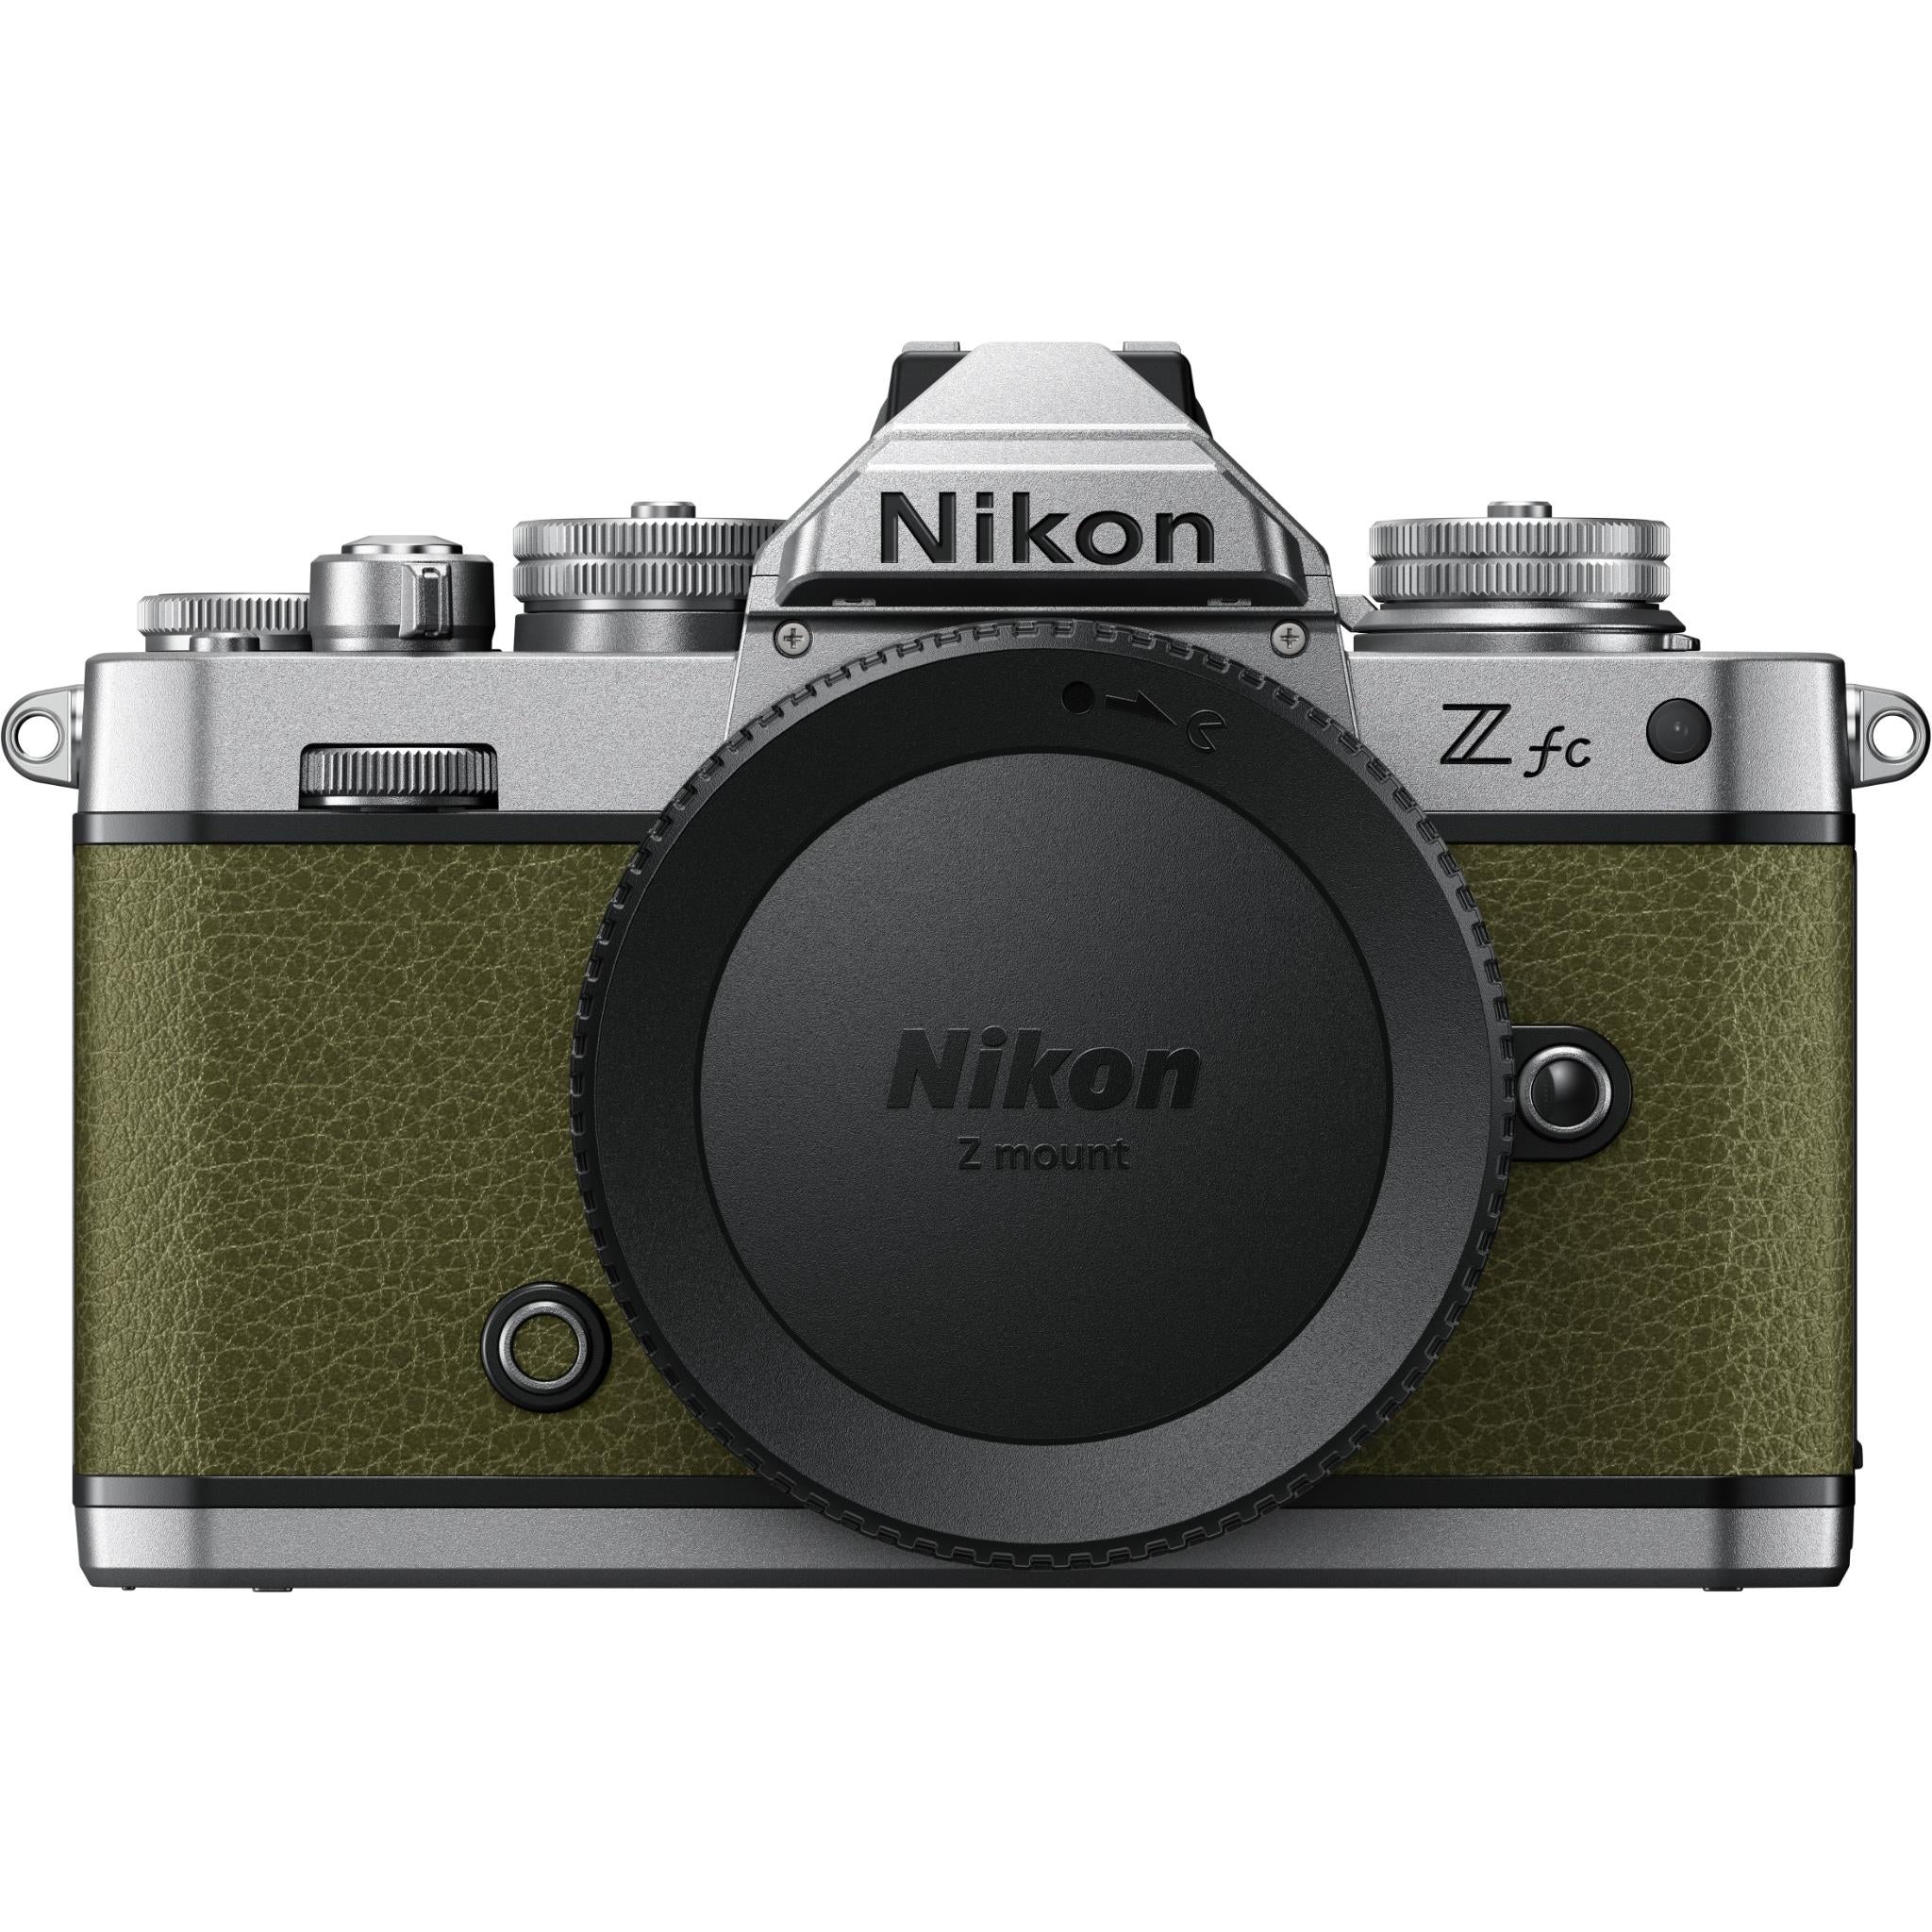 Nikon Z Fc Mirrorless Camera (Body Only) [Olive Green]